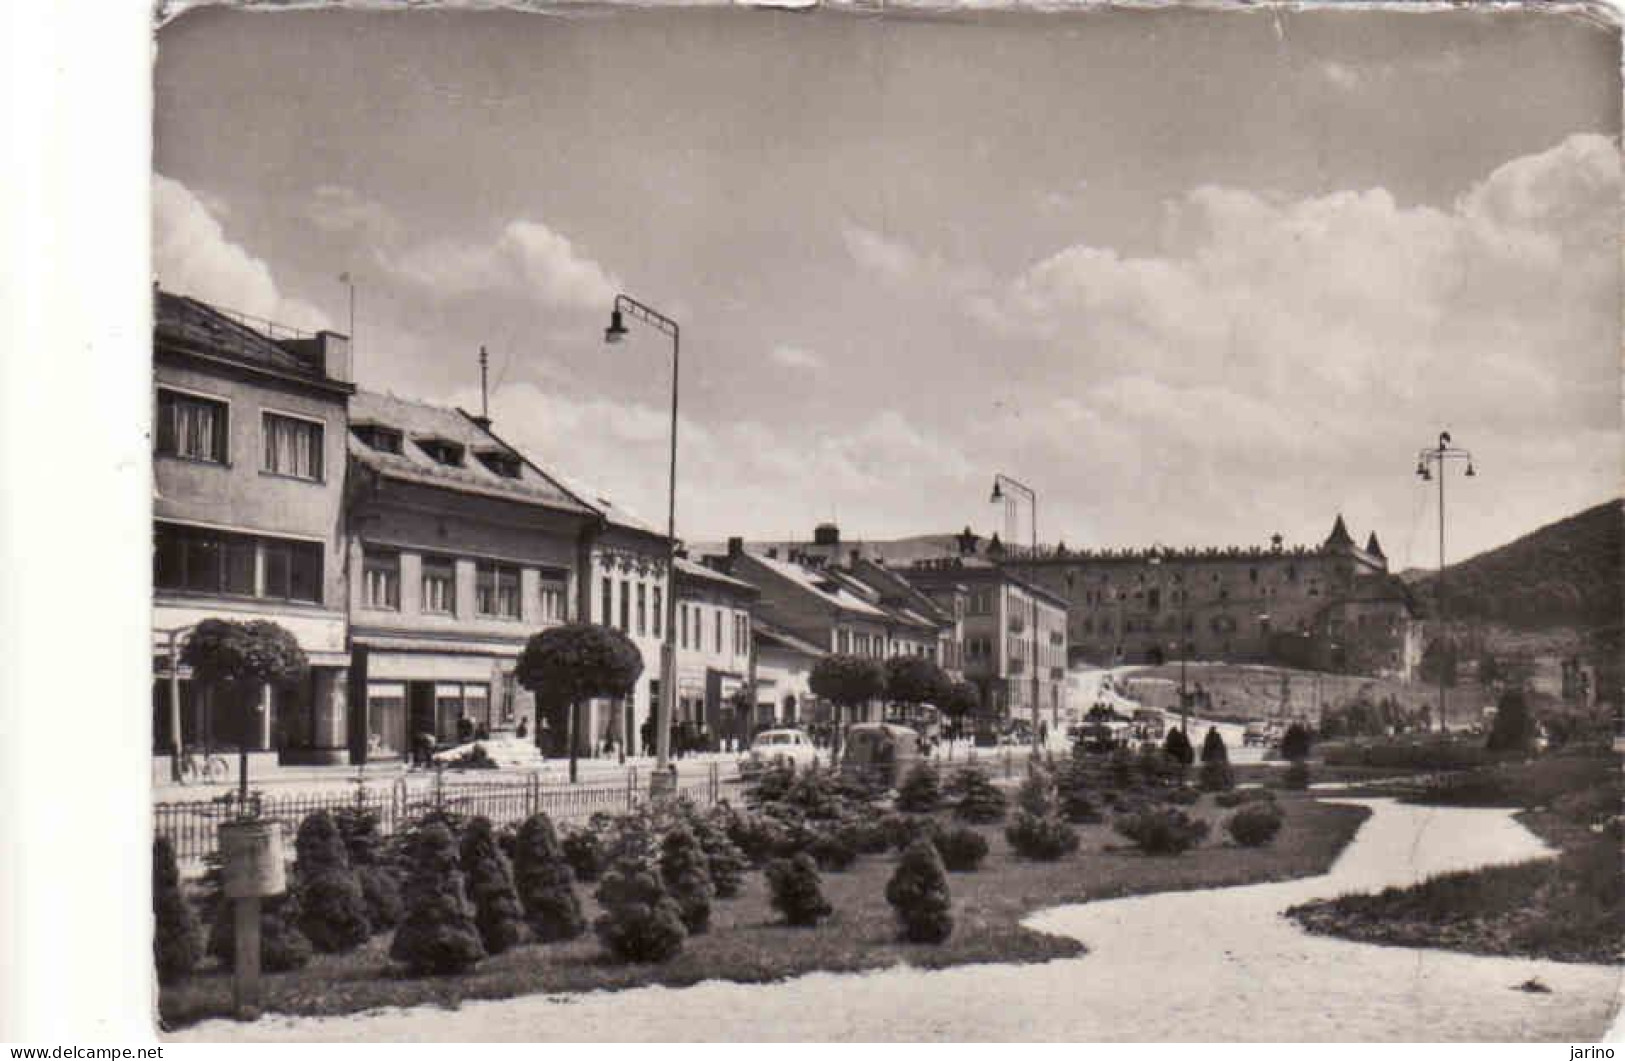 Slovakia, Zvolen, Used 1957 - Slovakia